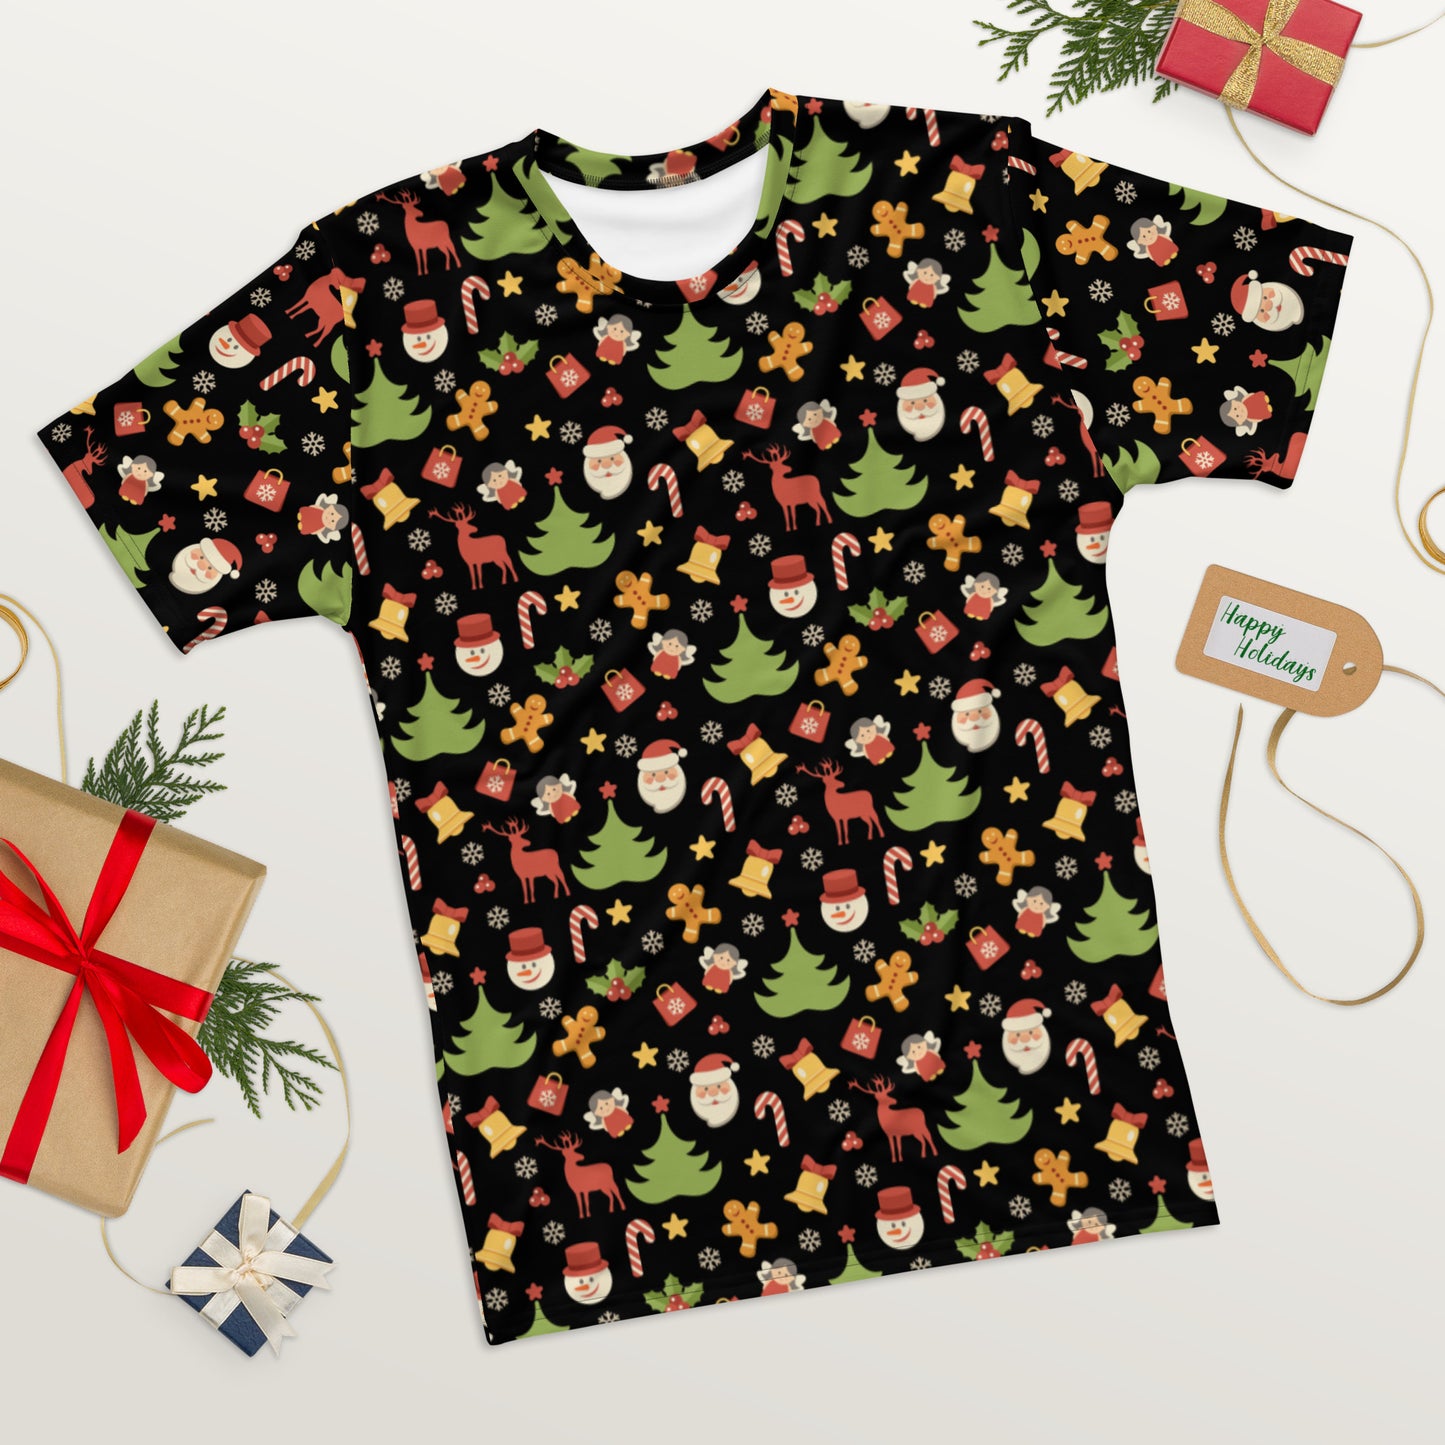 Men's Christmas Mash Up  t-shirt/pajama top